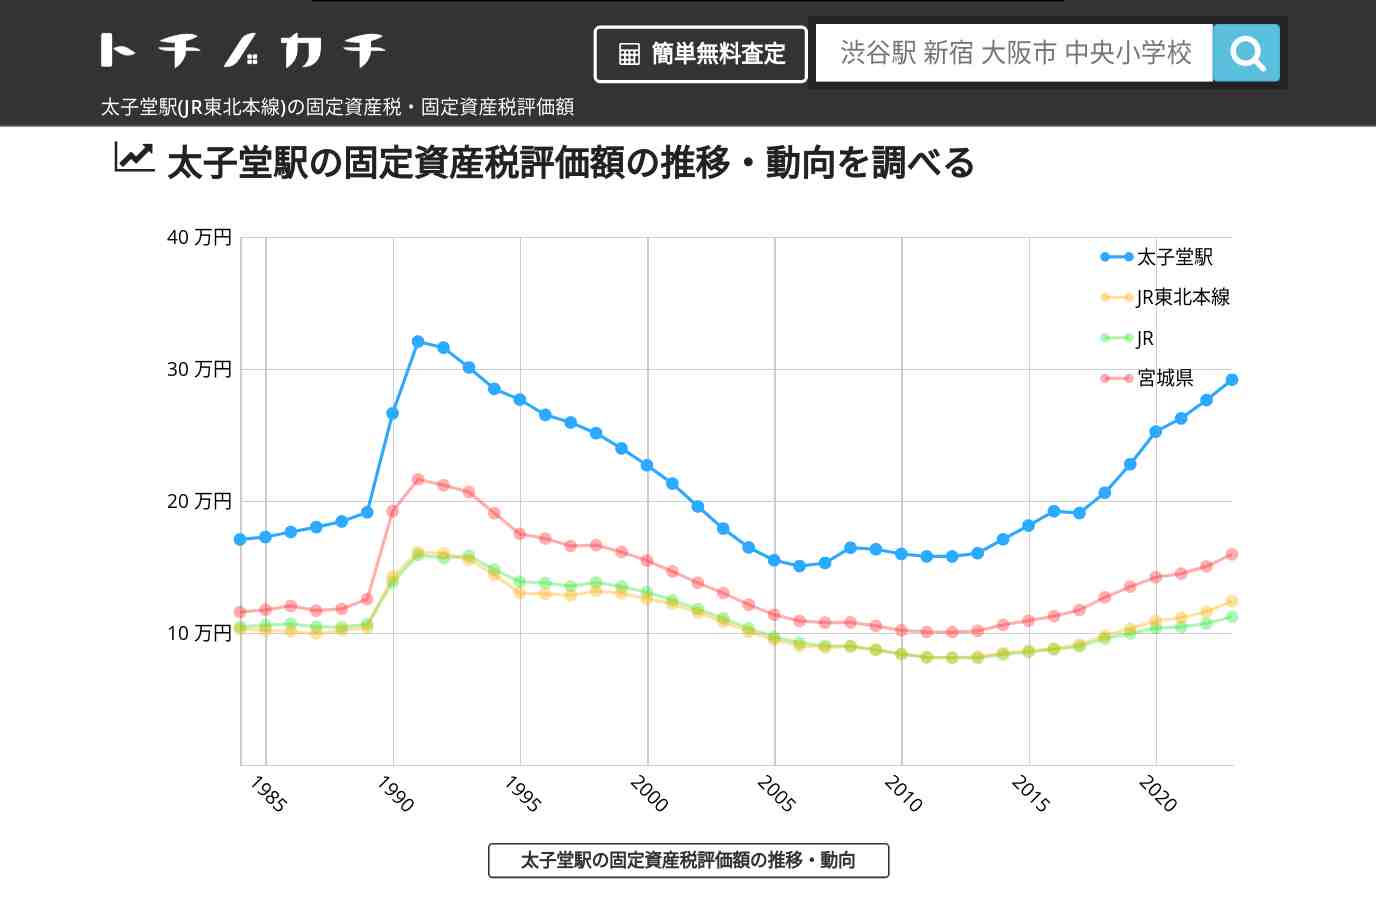 太子堂駅(JR東北本線)の固定資産税・固定資産税評価額 | トチノカチ